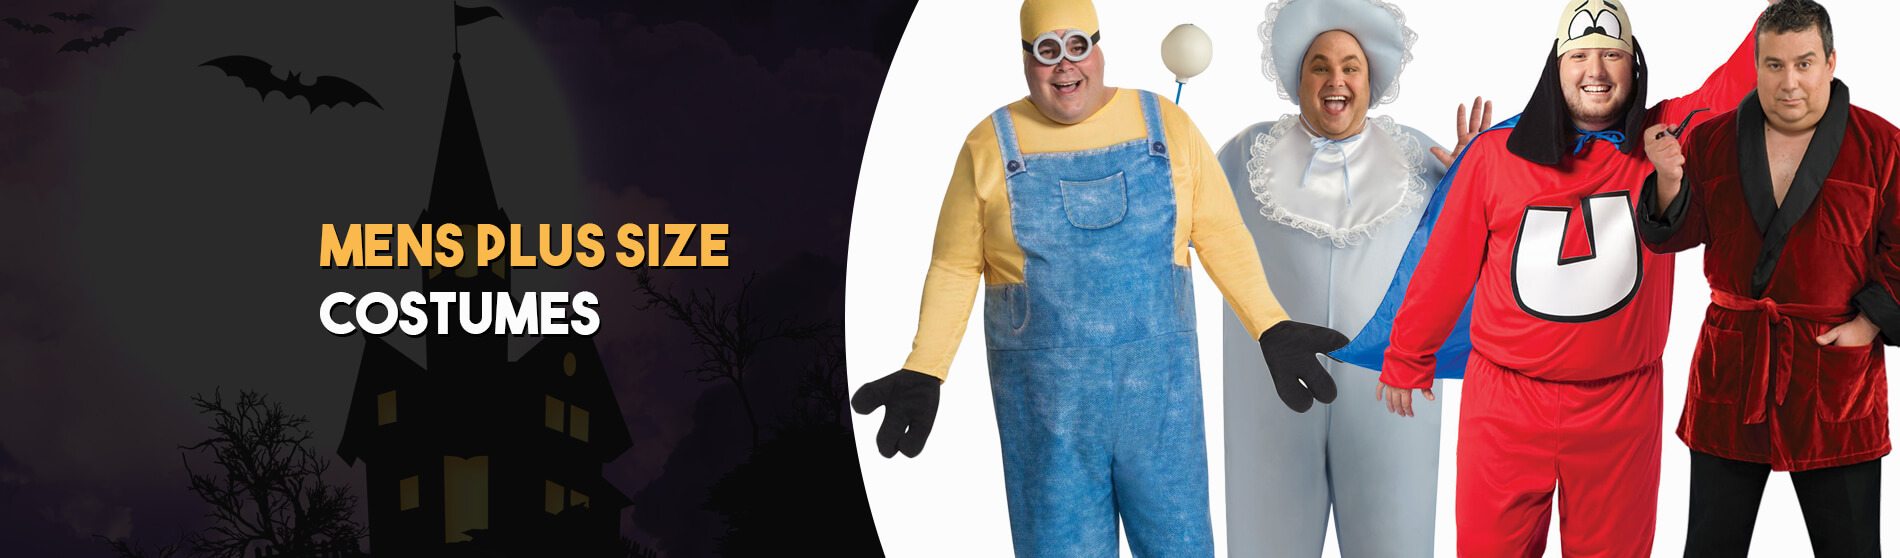 Glendale Halloween : mens-plus-size-costumes1